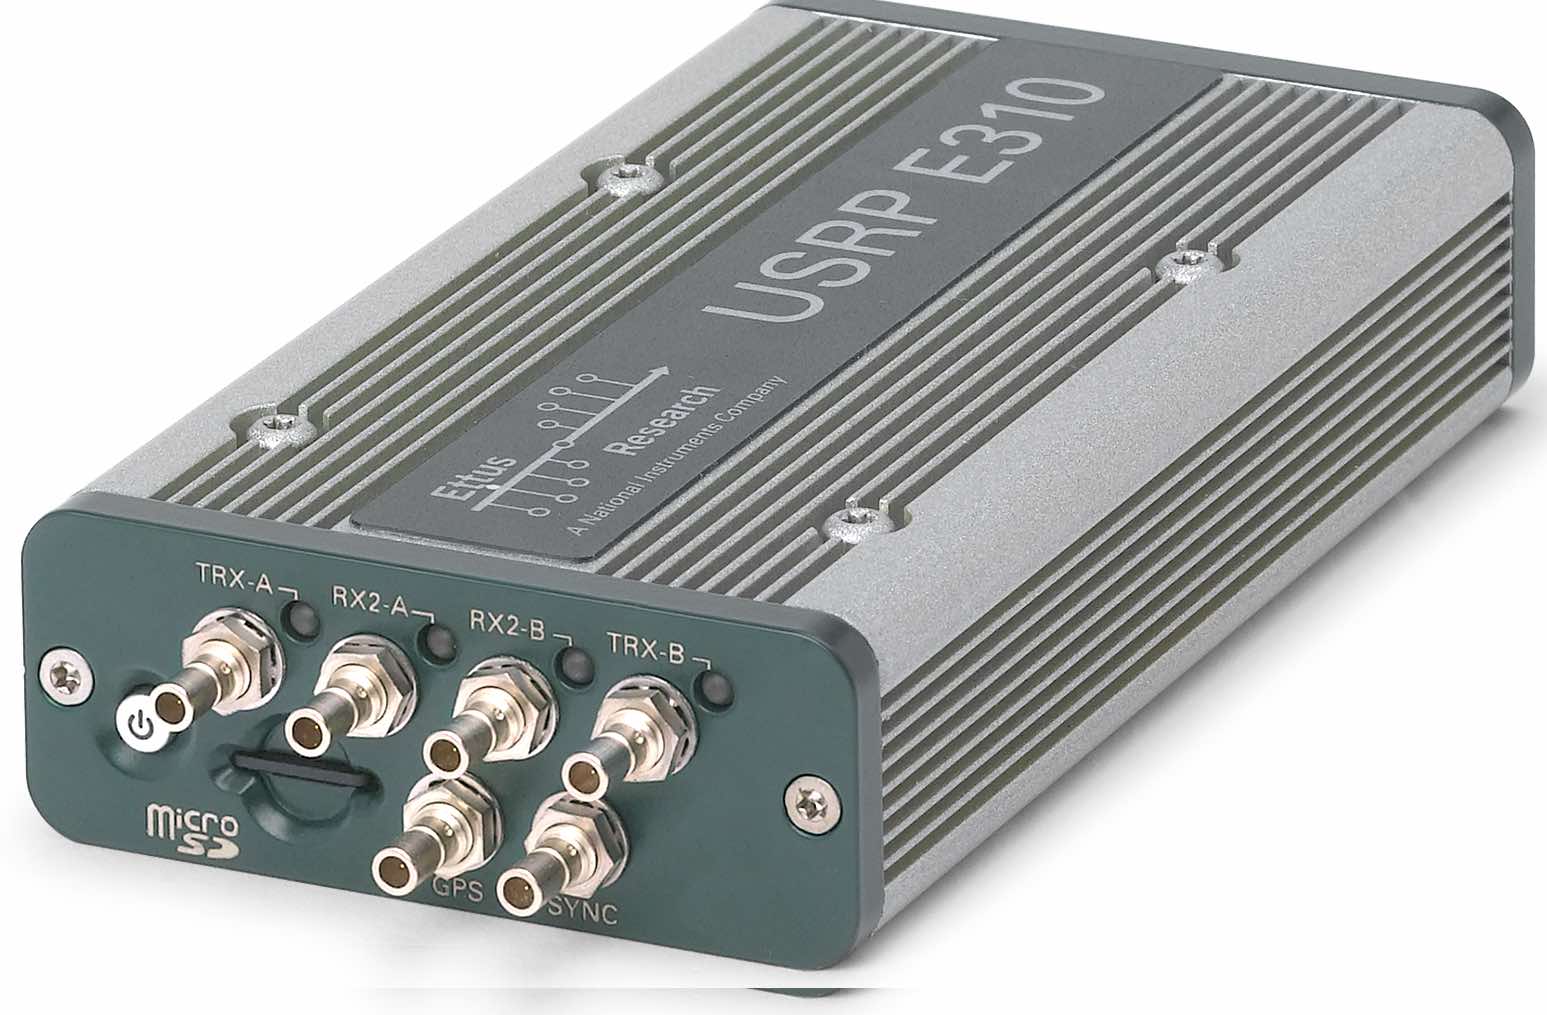 USRP e310 -- An embedded high performance SDR